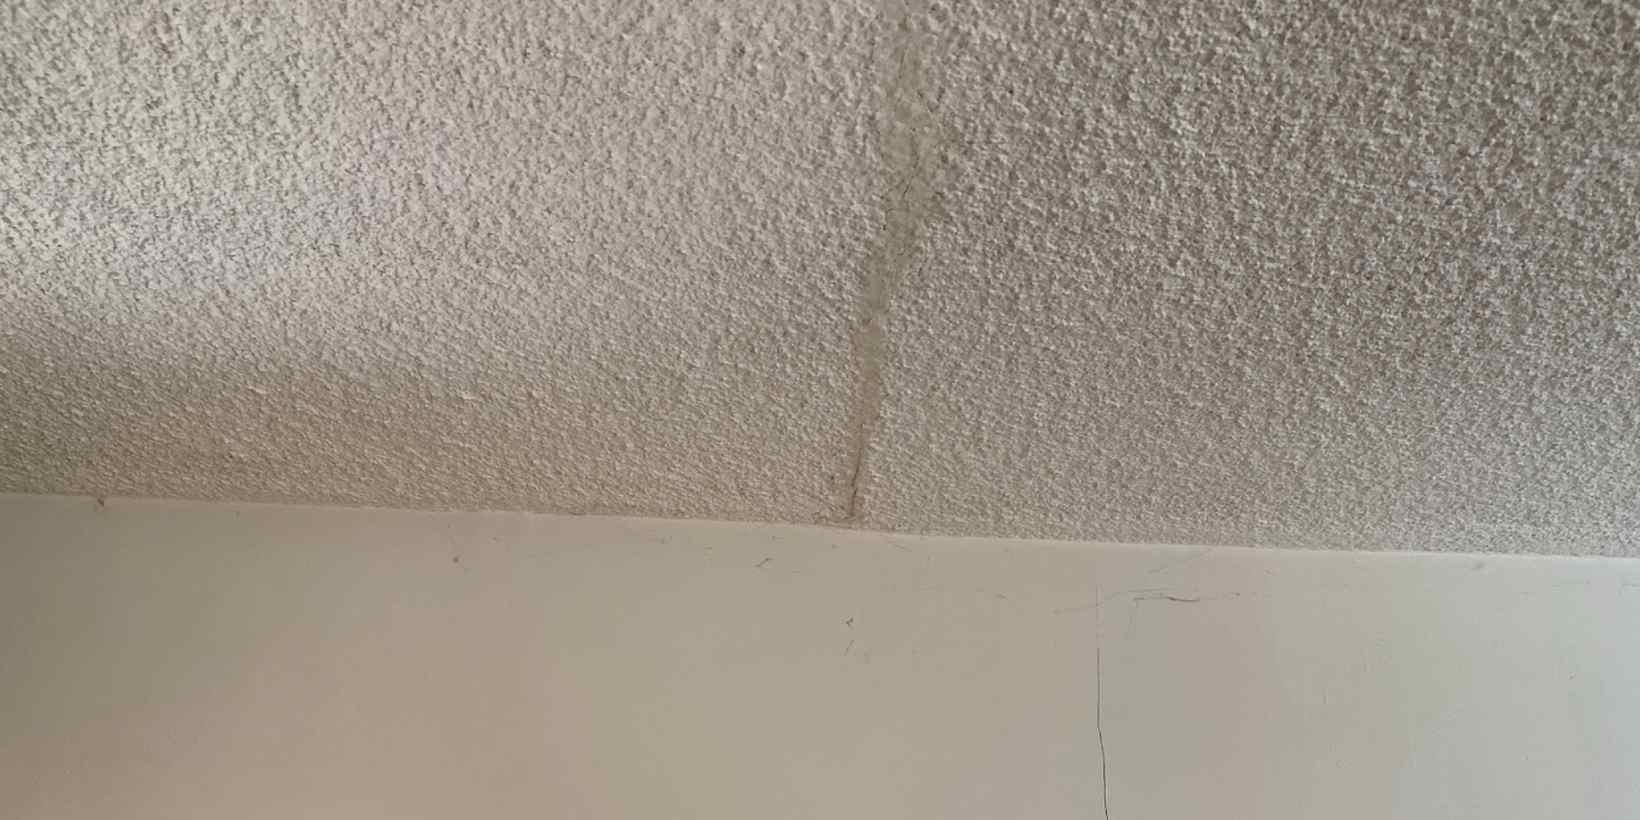 Ceiling Cracks (Dalinghaus)